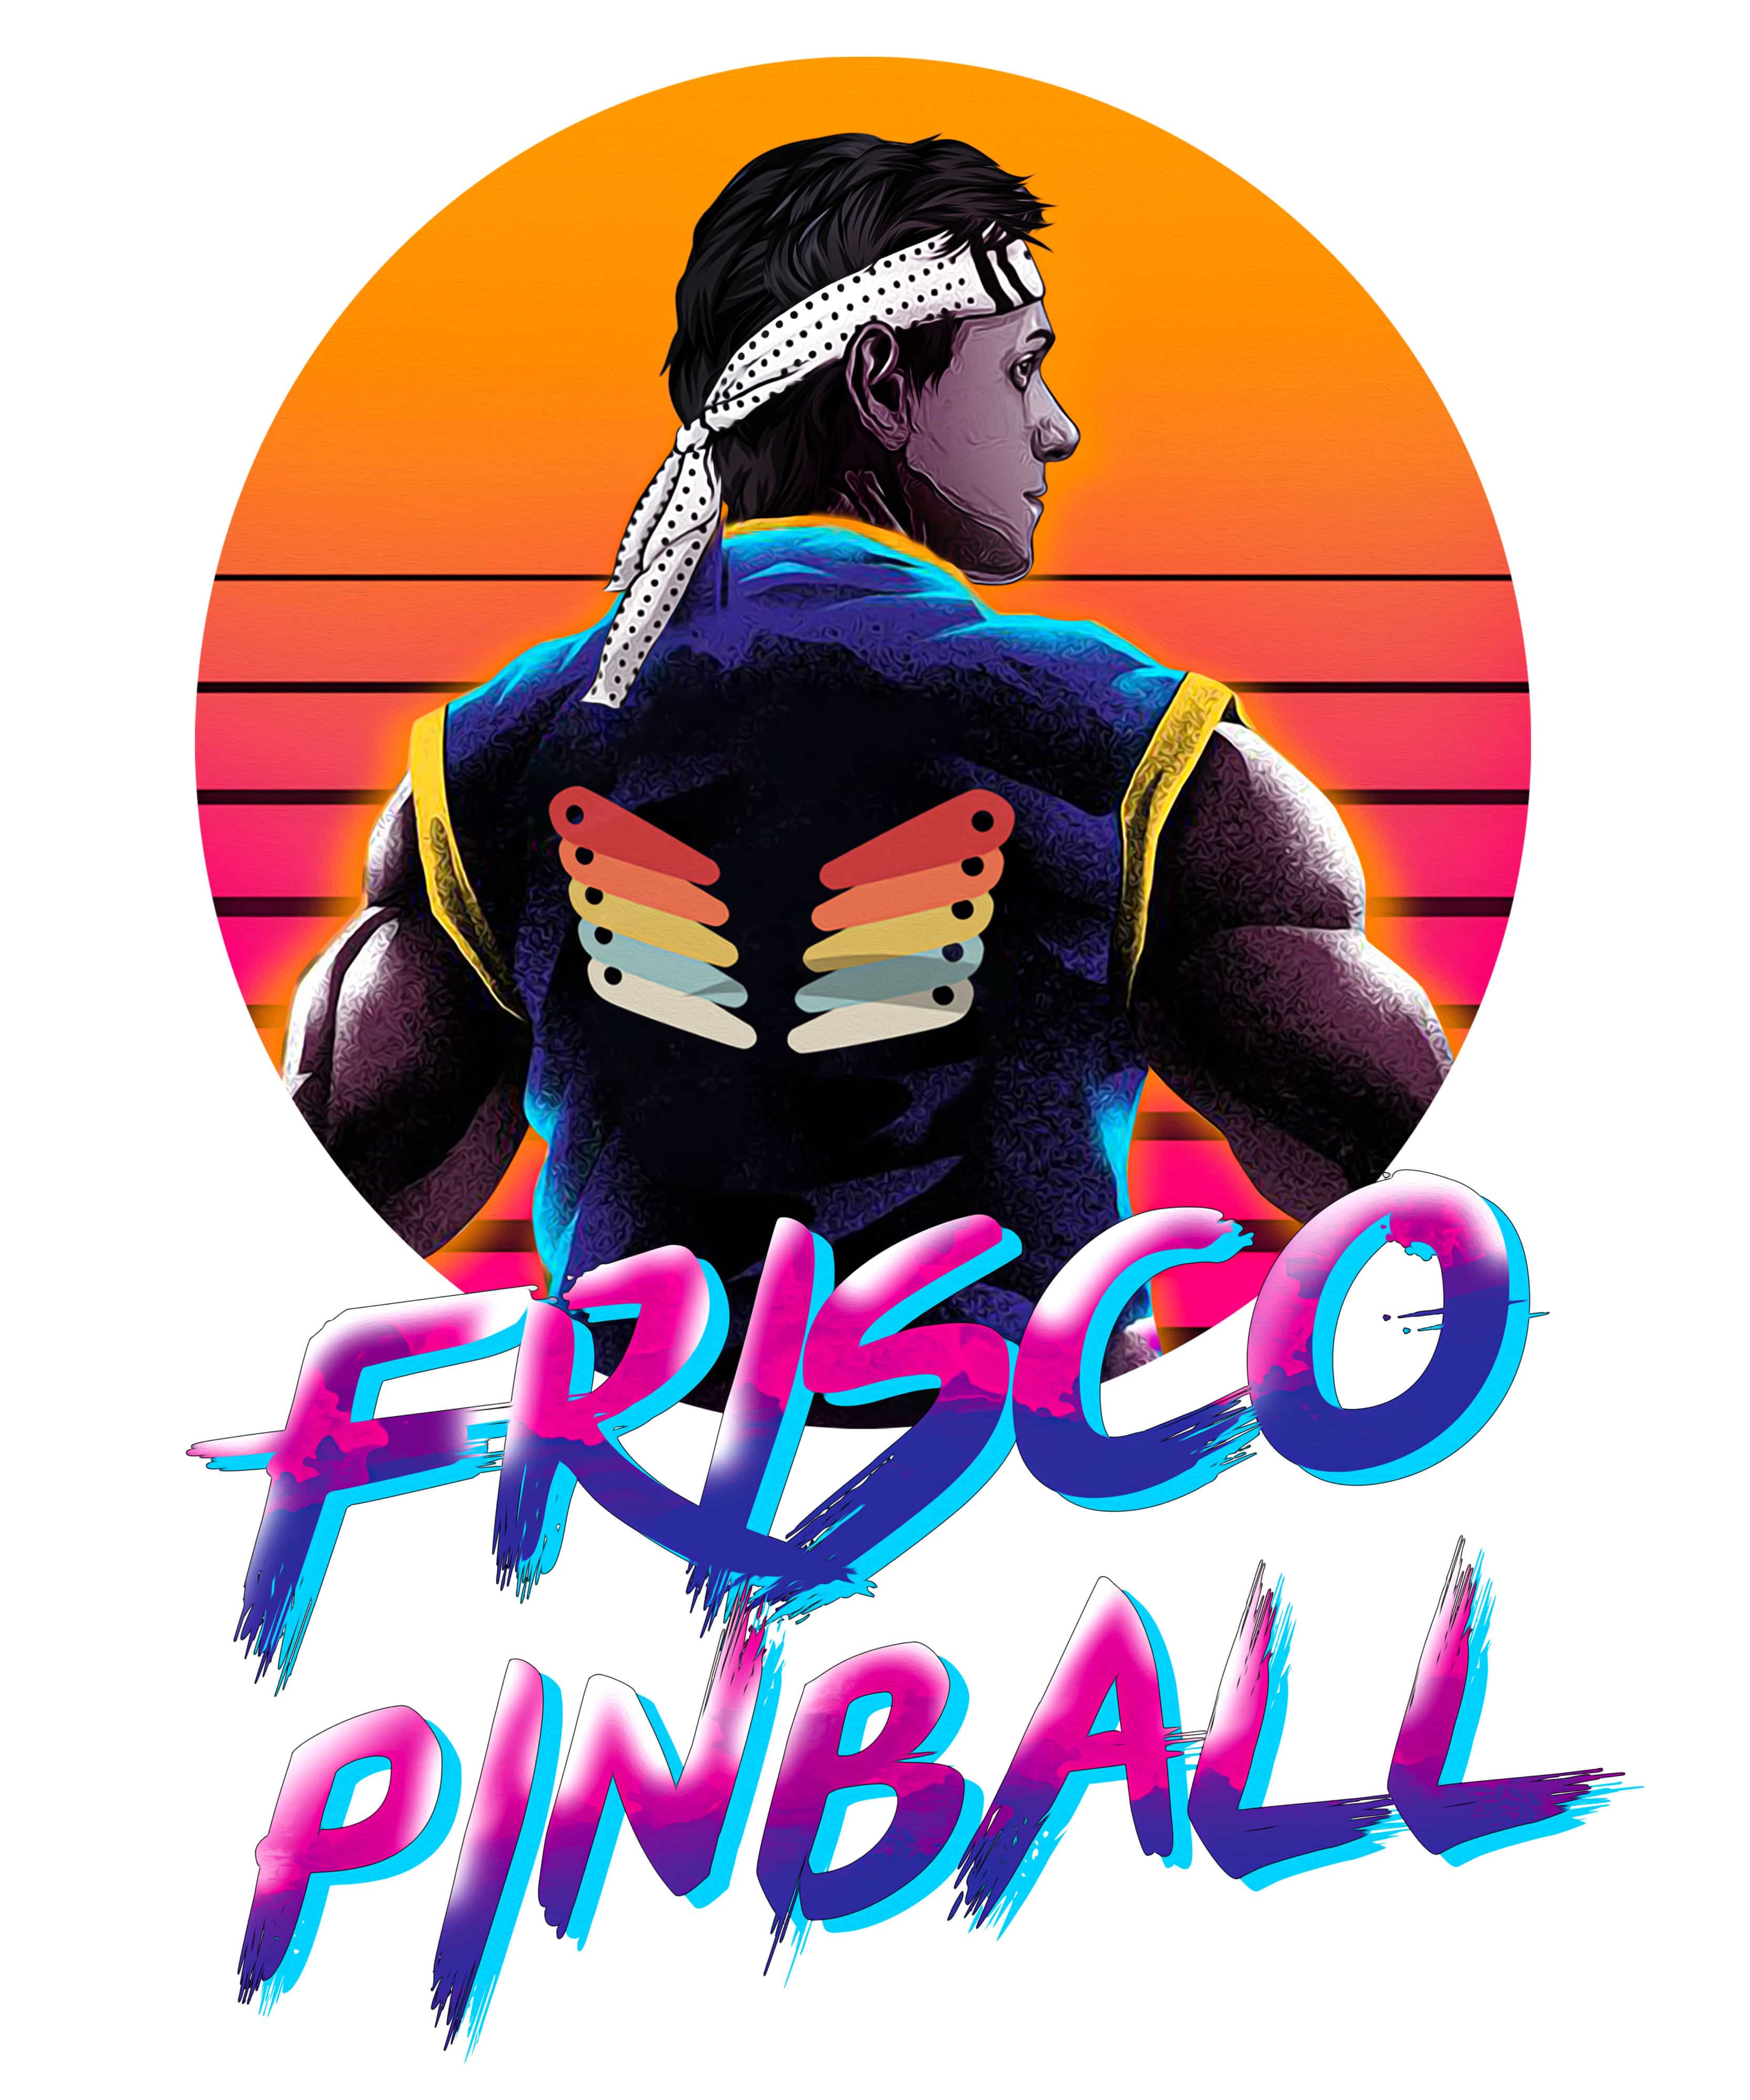 Frisco Pinball